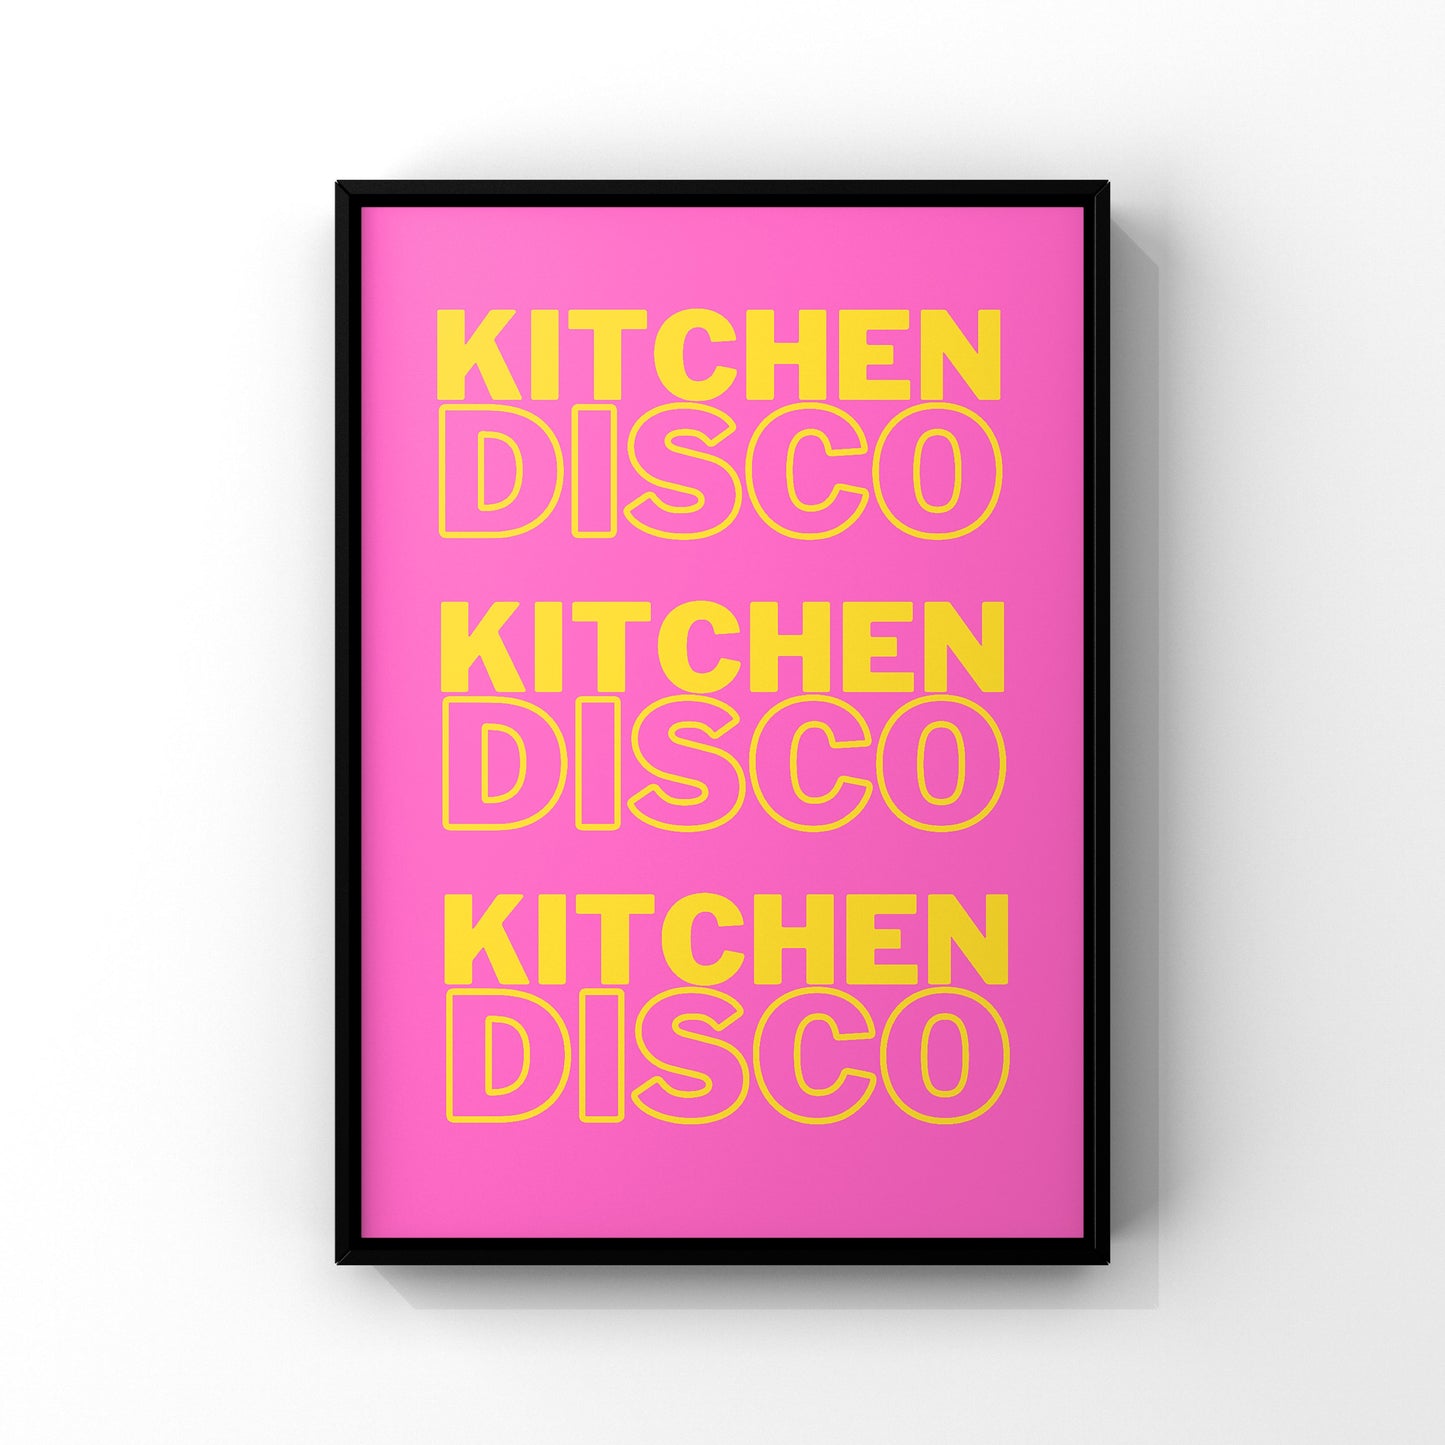 Kitchen disco